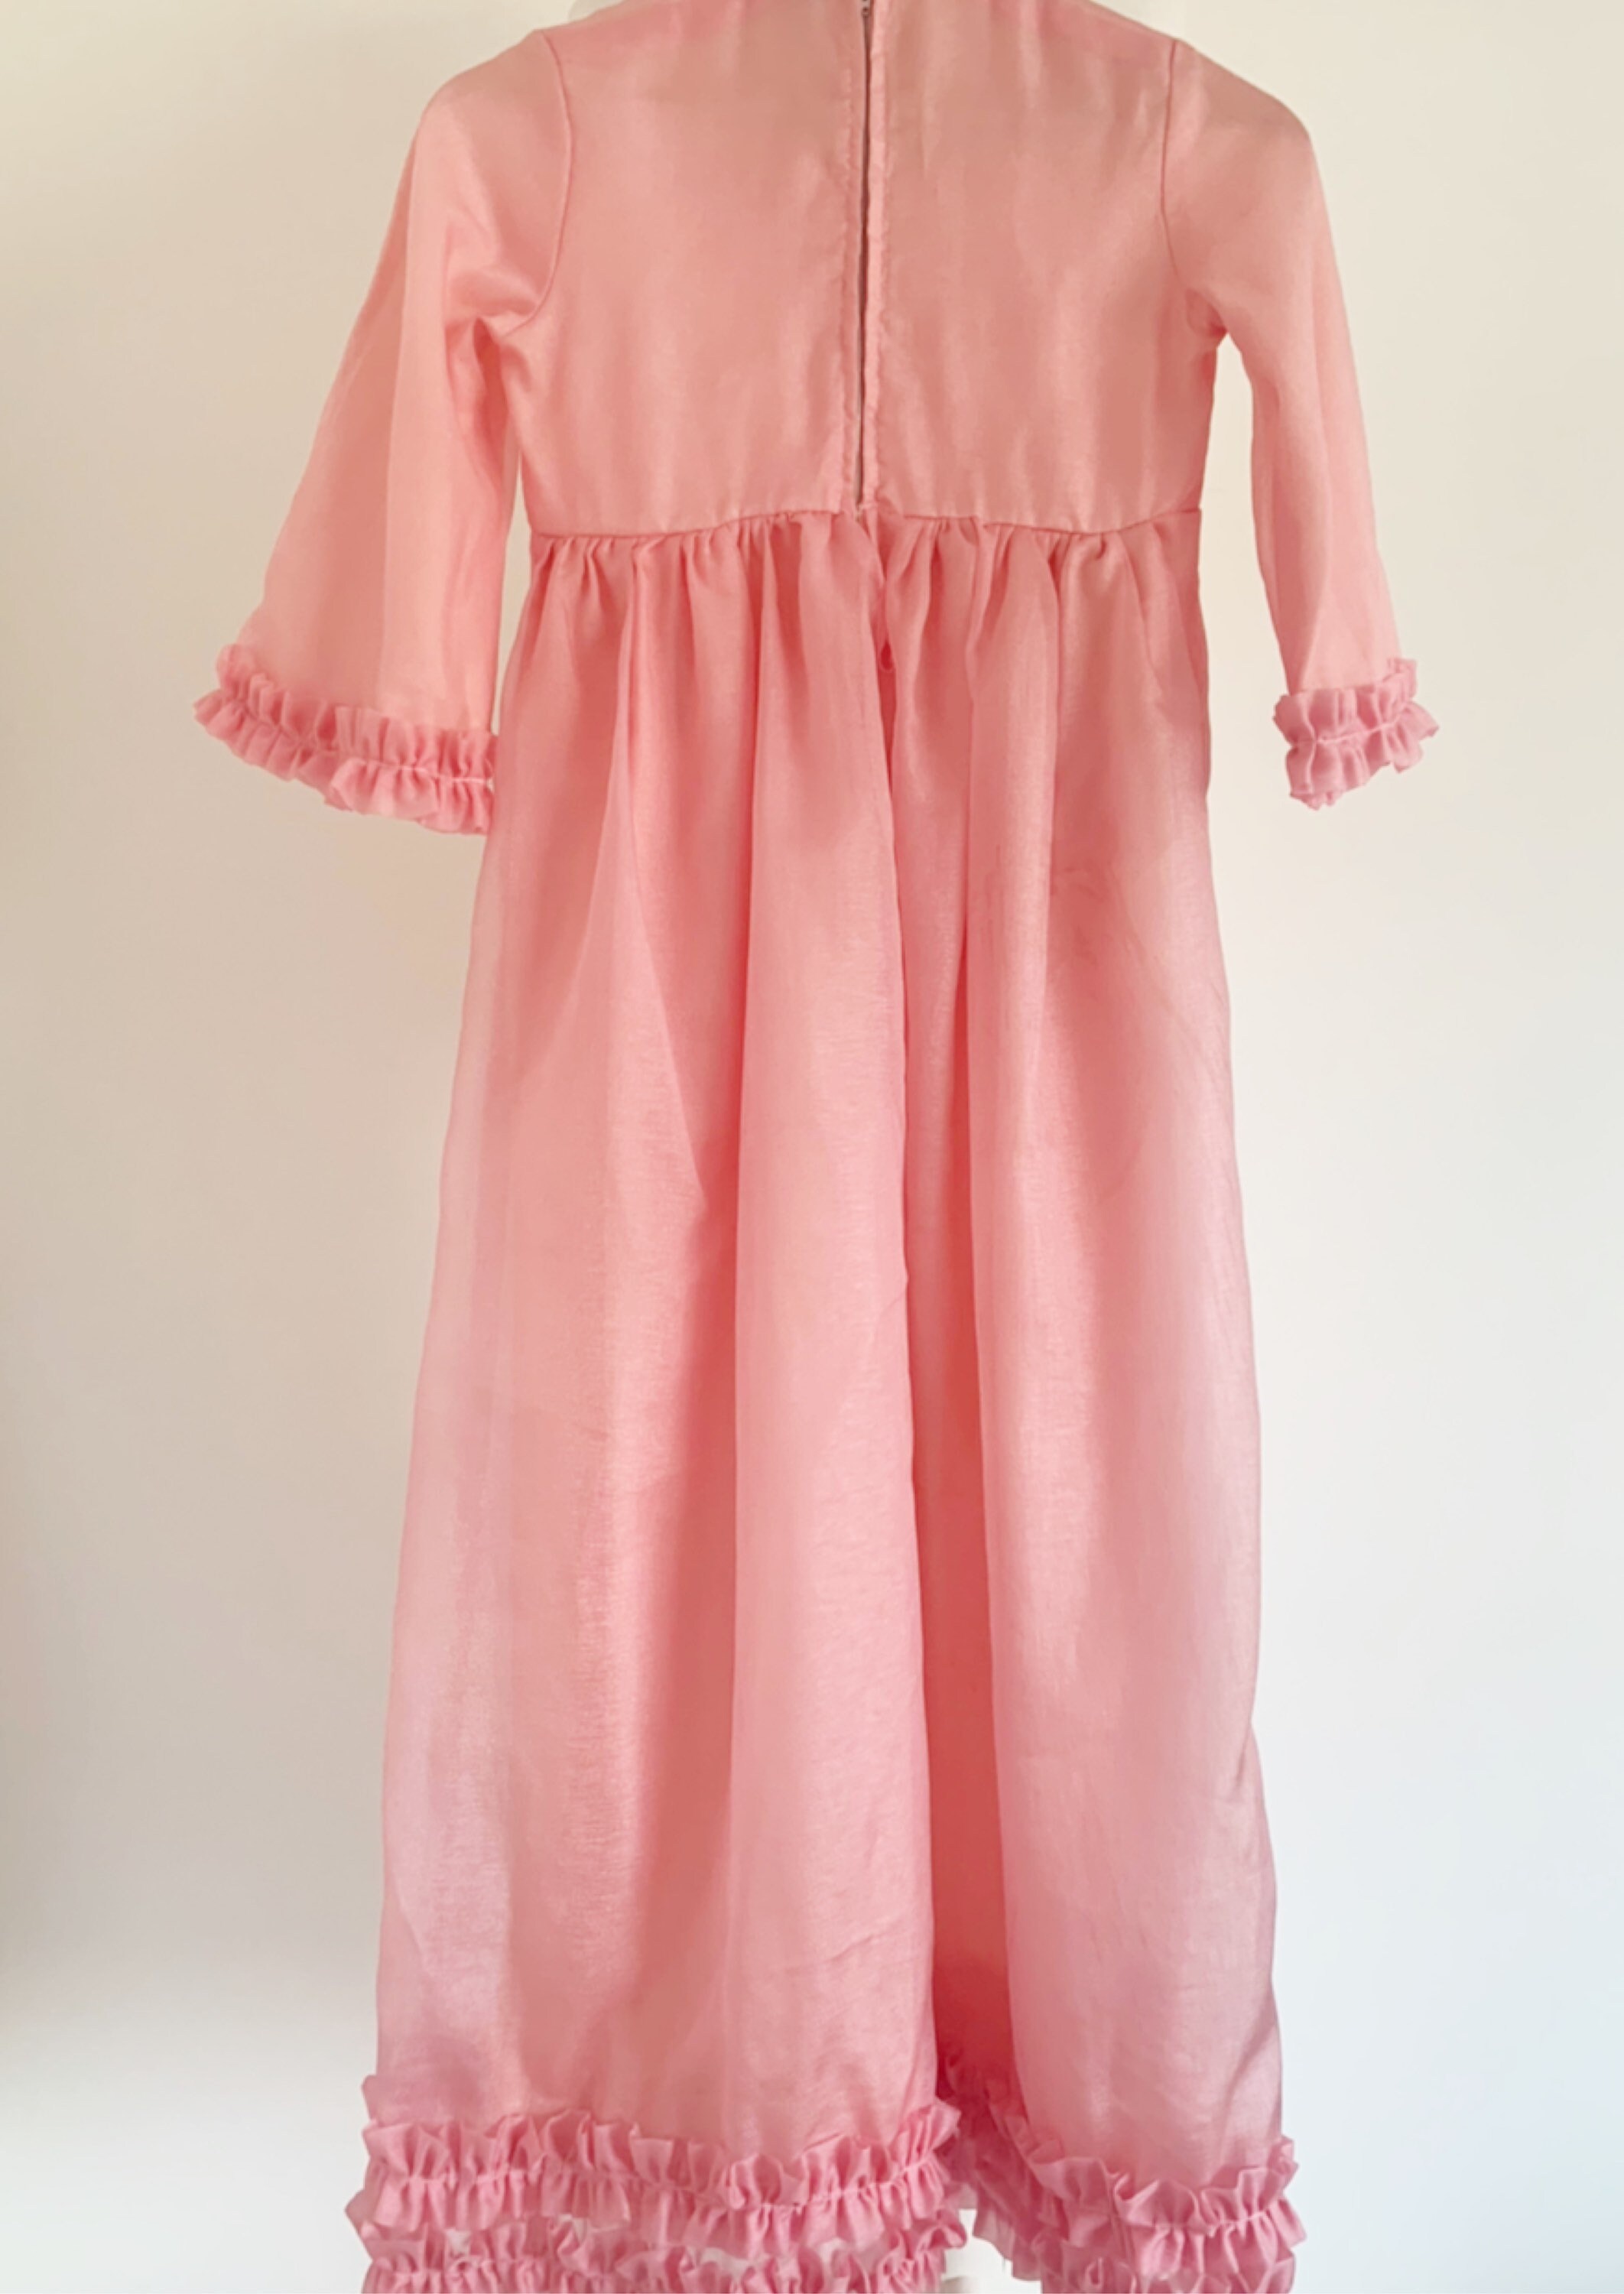 Baby Pink Ruffle Festival Summer 70s Vintage Dress Size UK 6 | Etsy